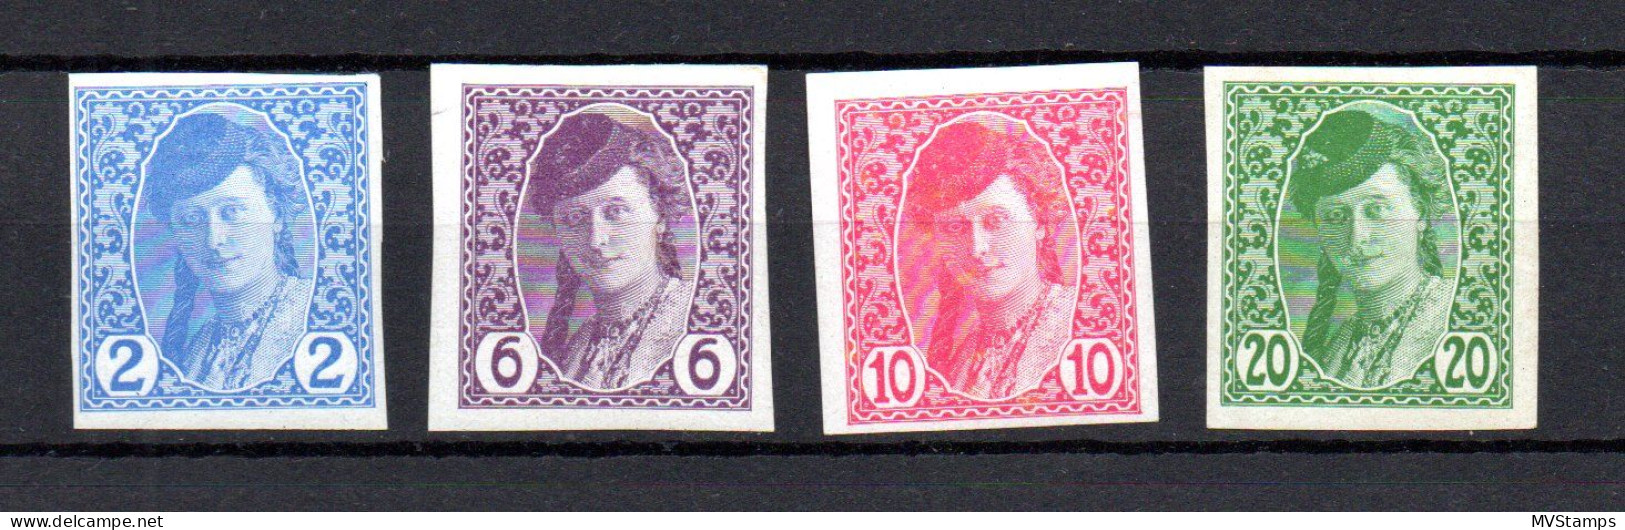 Bosnia Herzegowina (Austria) 1913 Old Set "Zeitungs" Paper-stamps (Michel 85/88) MLH - Bosnia And Herzegovina